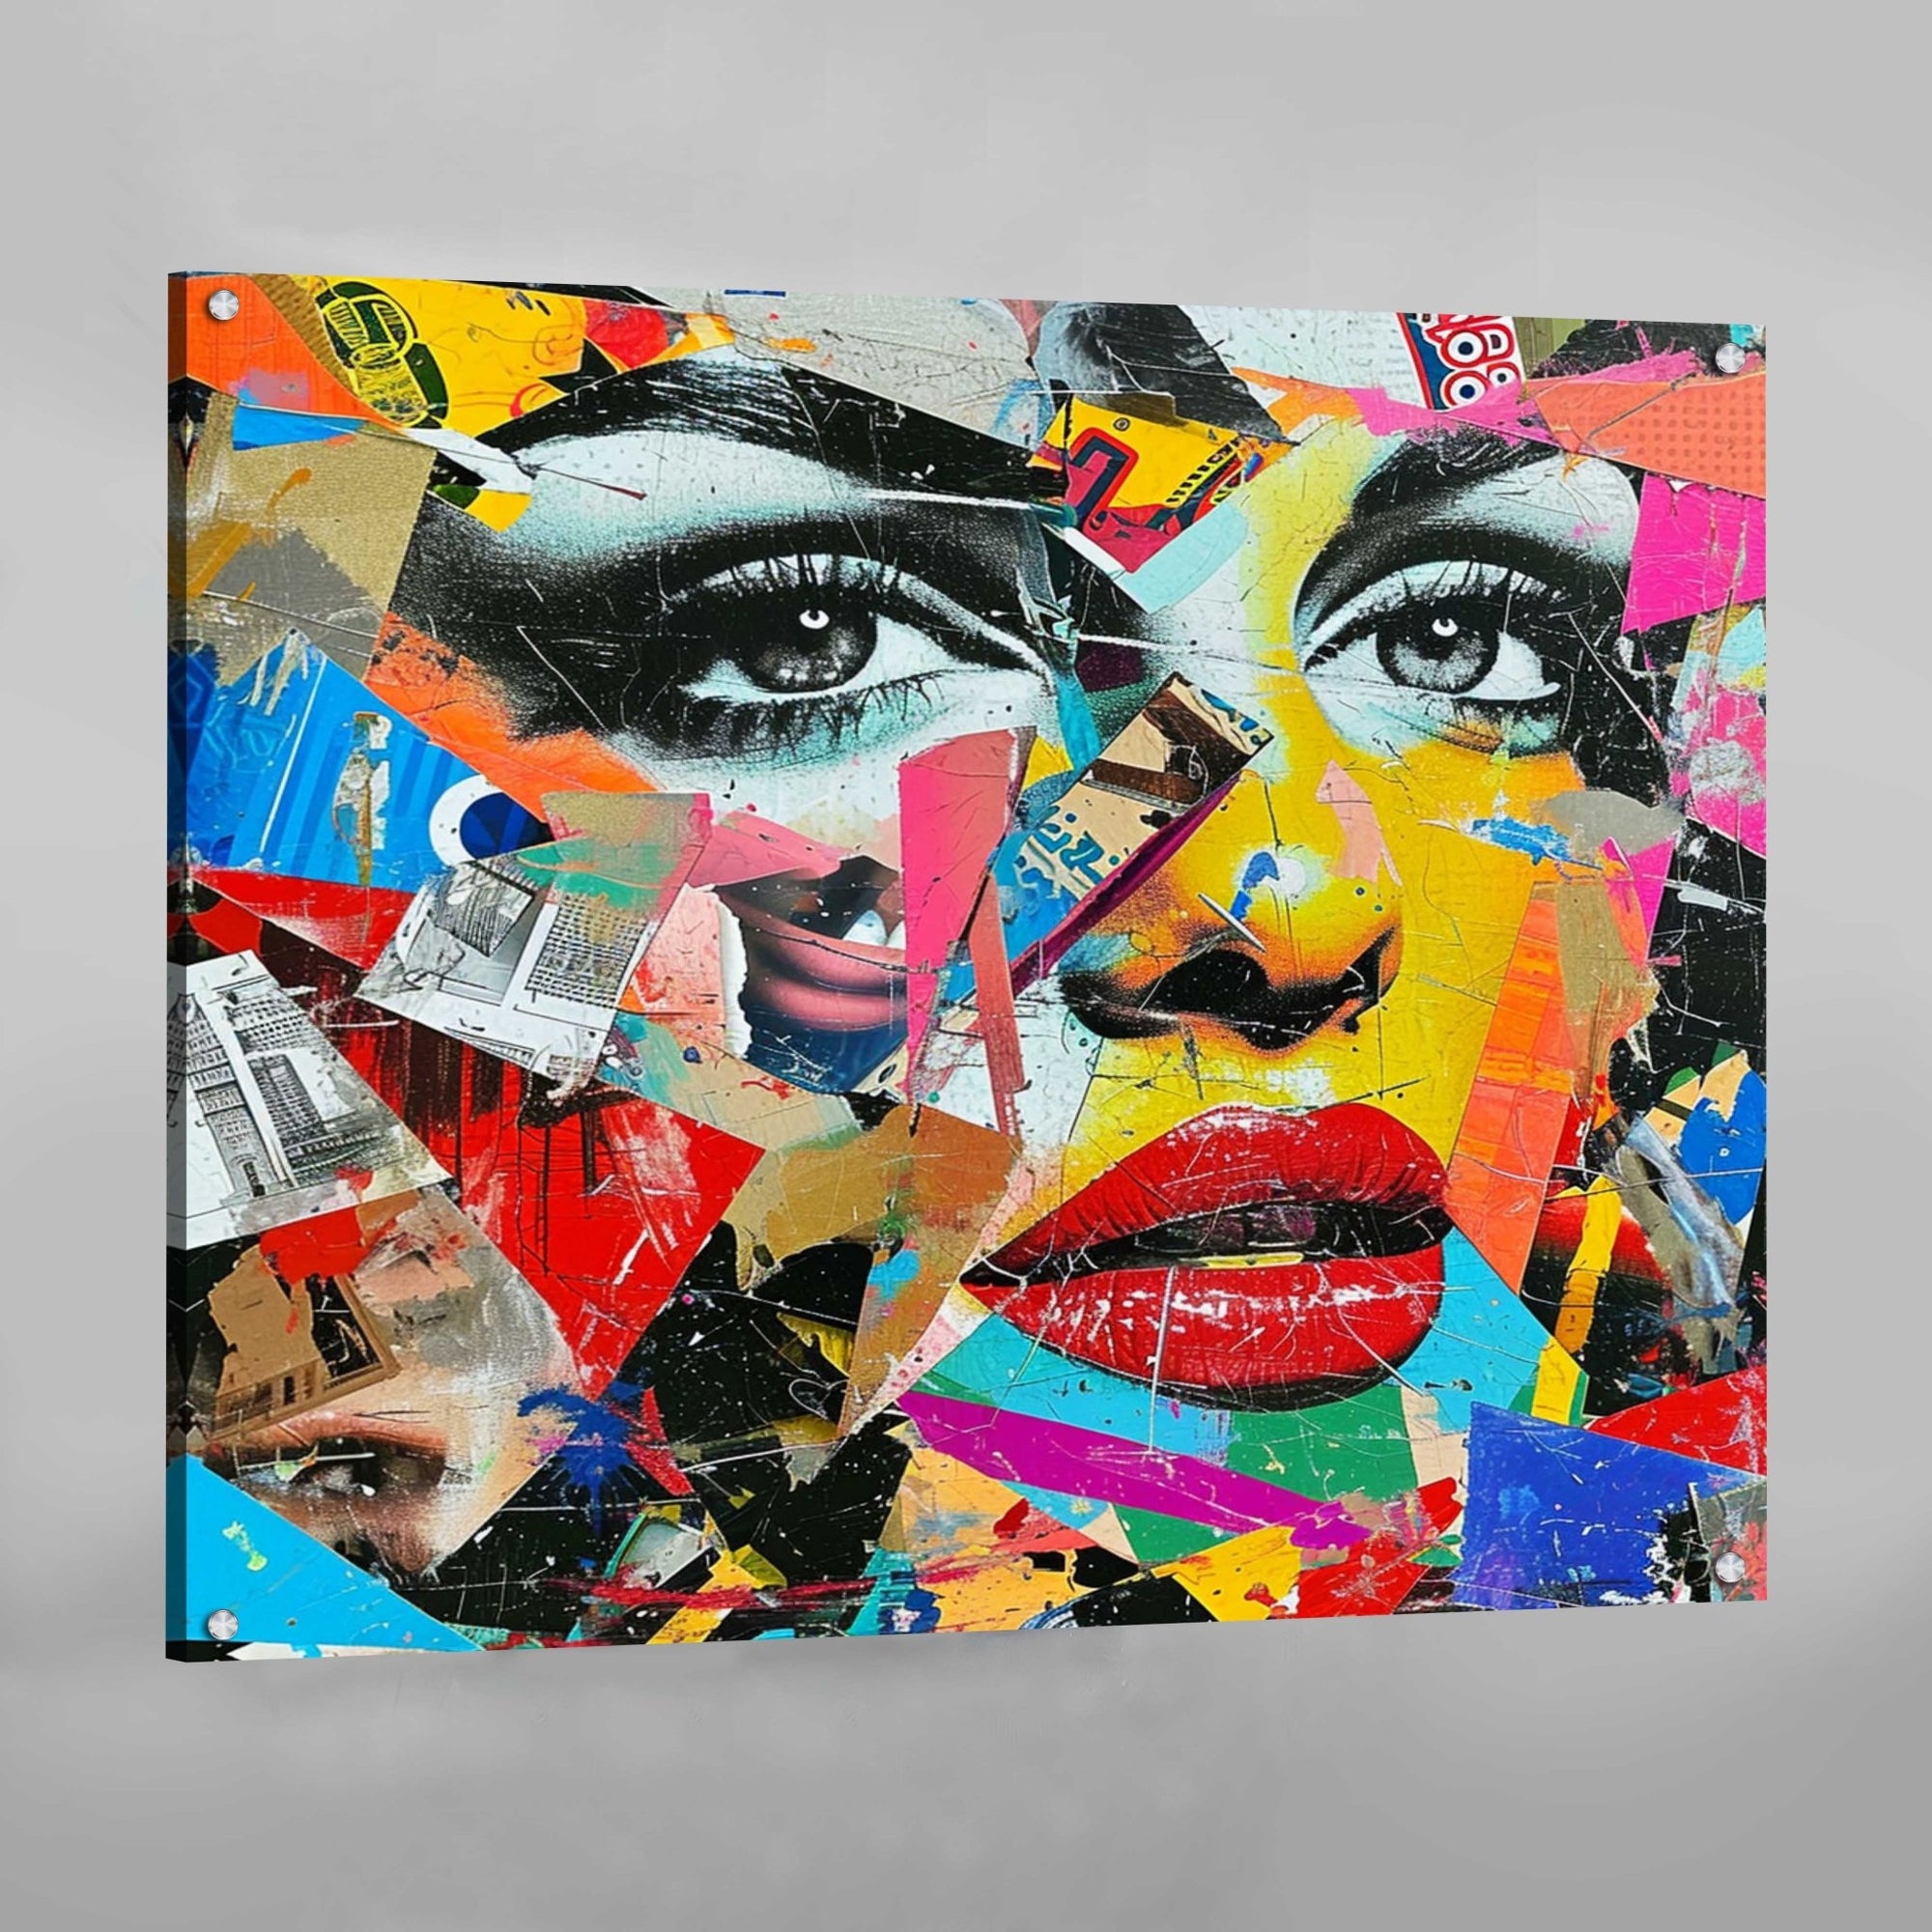 Pop Art Woman Face Canvas - The Trendy Art